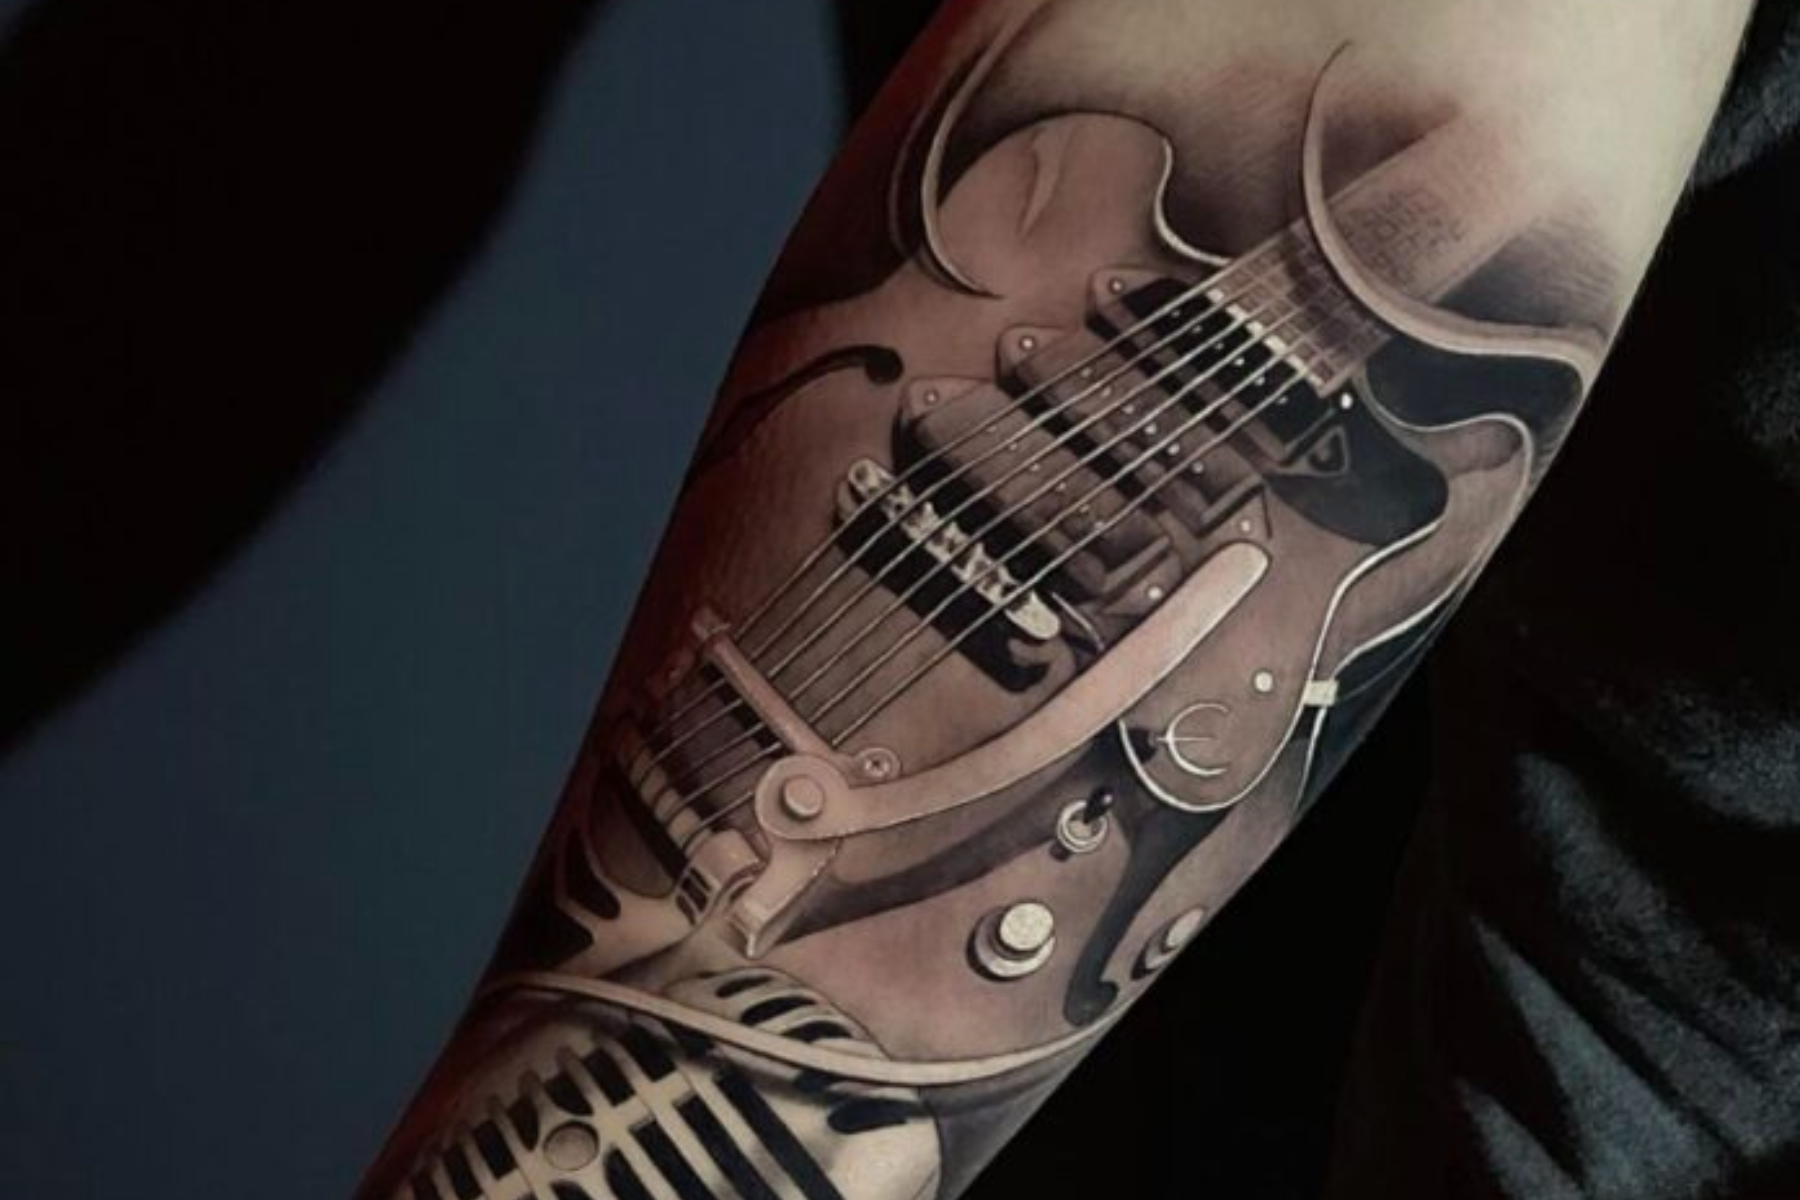 Ghost Playing a Bass - Joe Perreze with Neon Tattoo in IA : r/tattoos